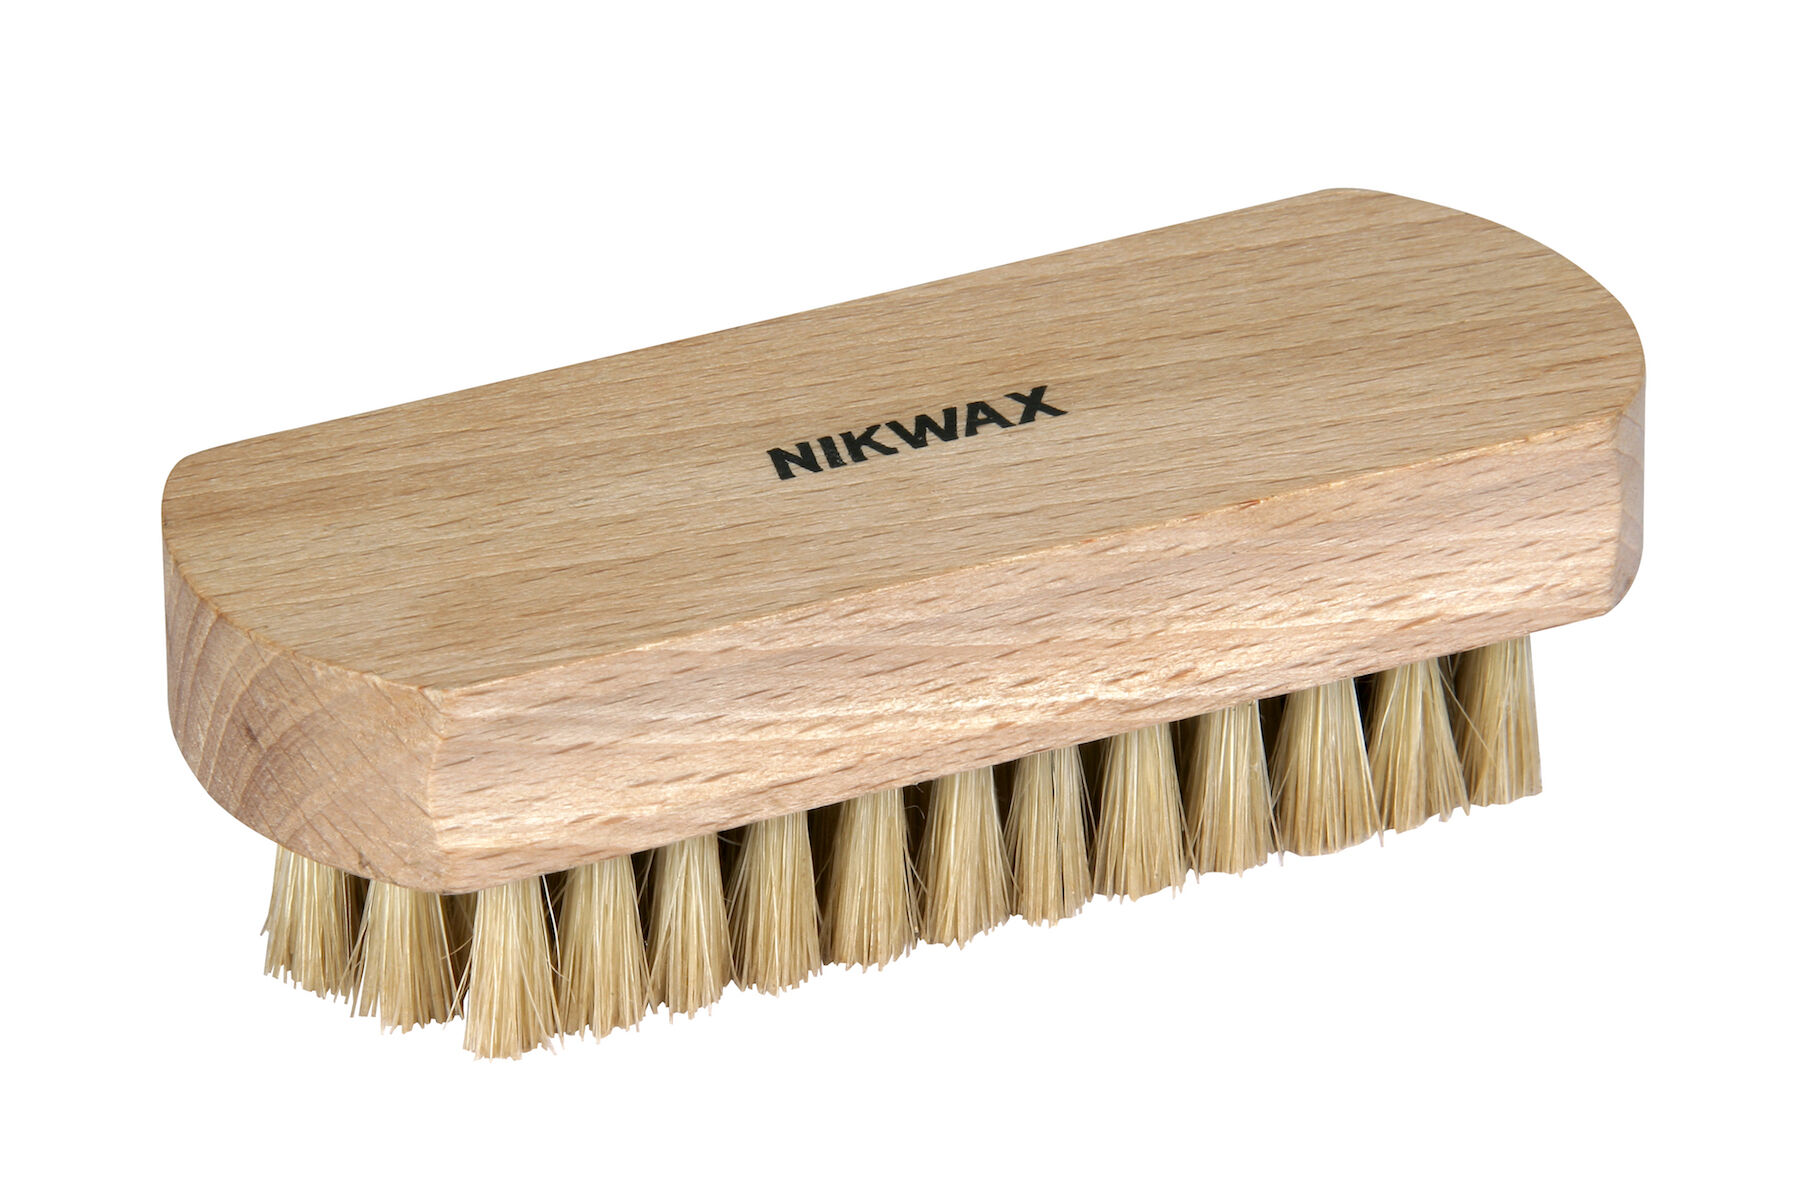 Nikwax - Brush Set for Walking boots - Shoe care product